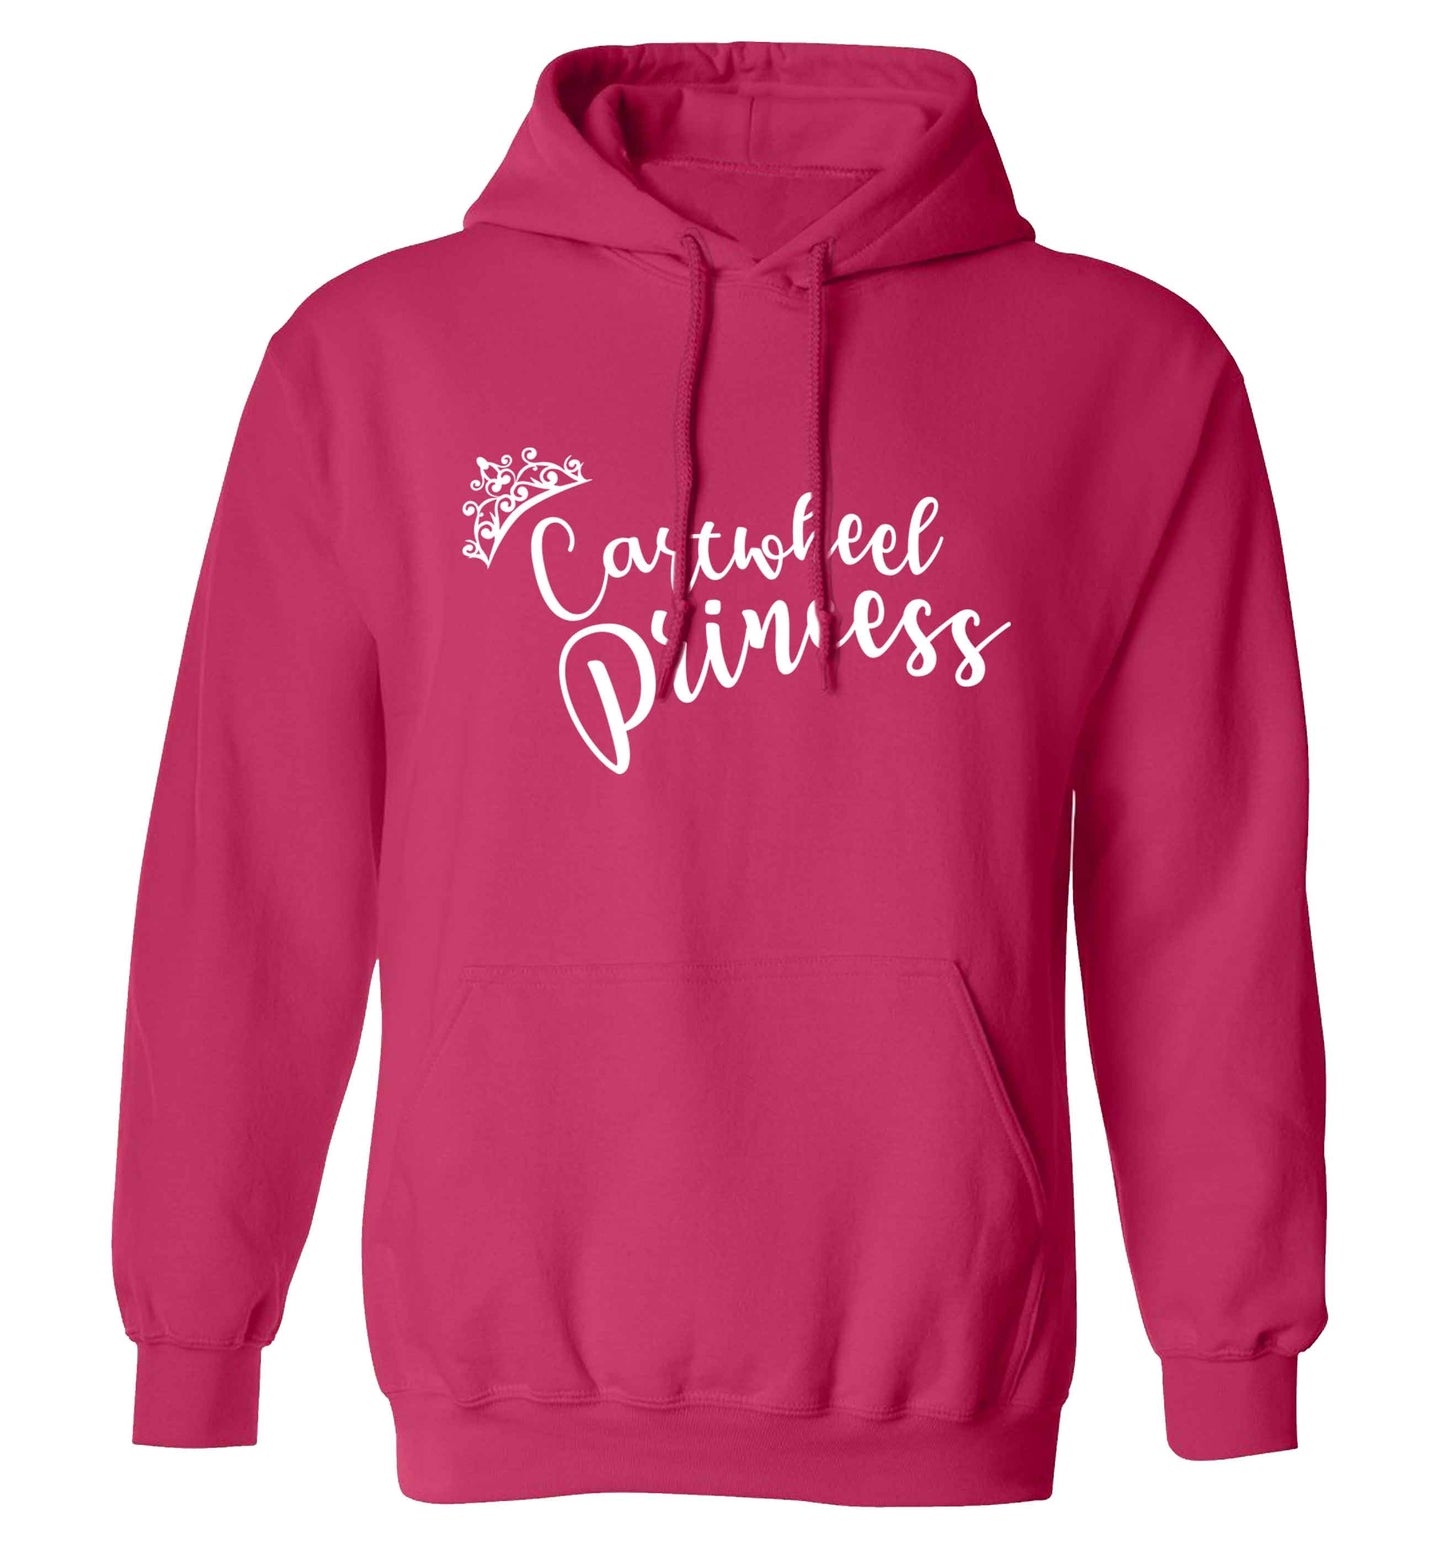 Cartwheel princess adults unisex pink hoodie 2XL